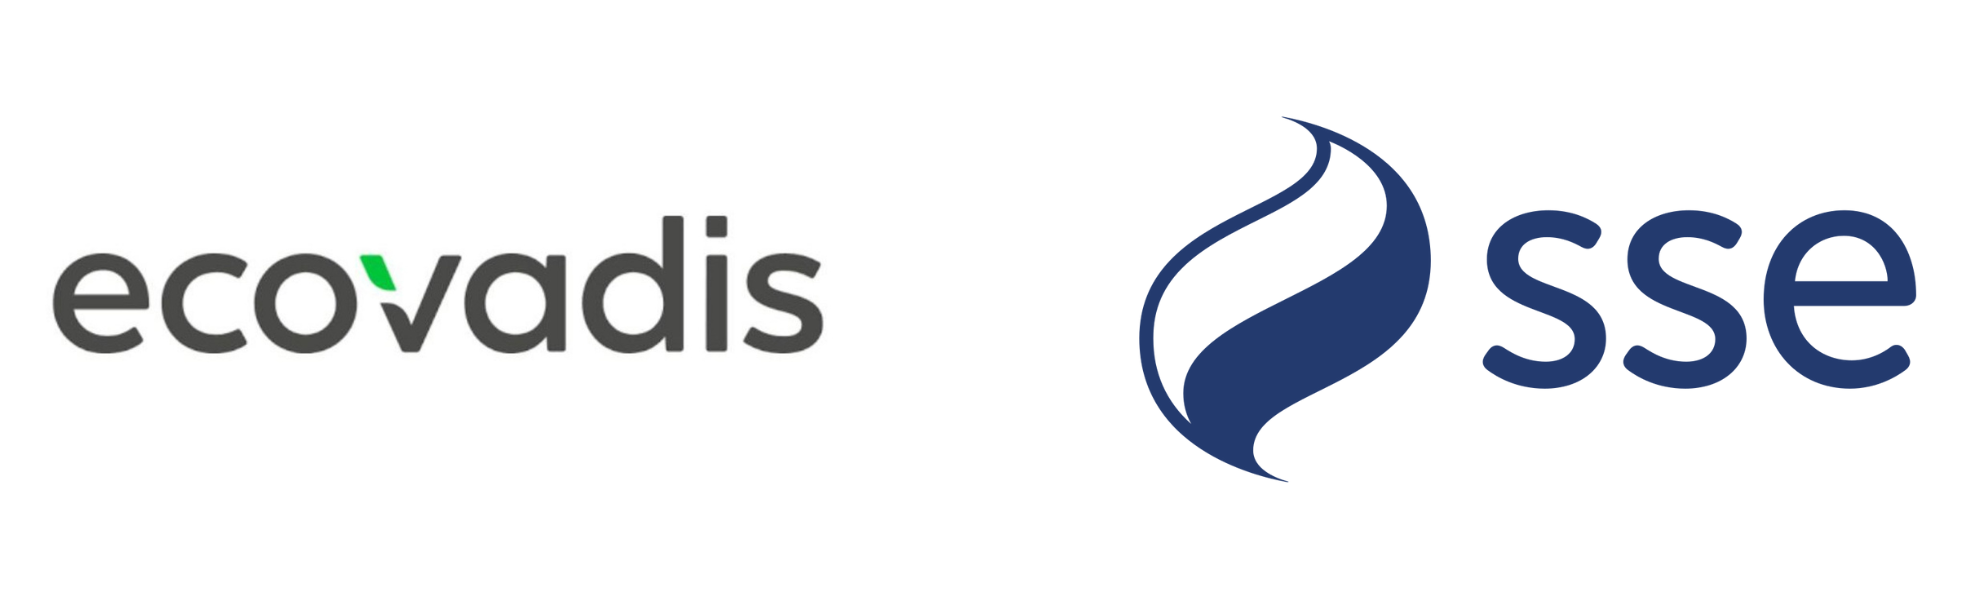 ecovadis logo and sse logo